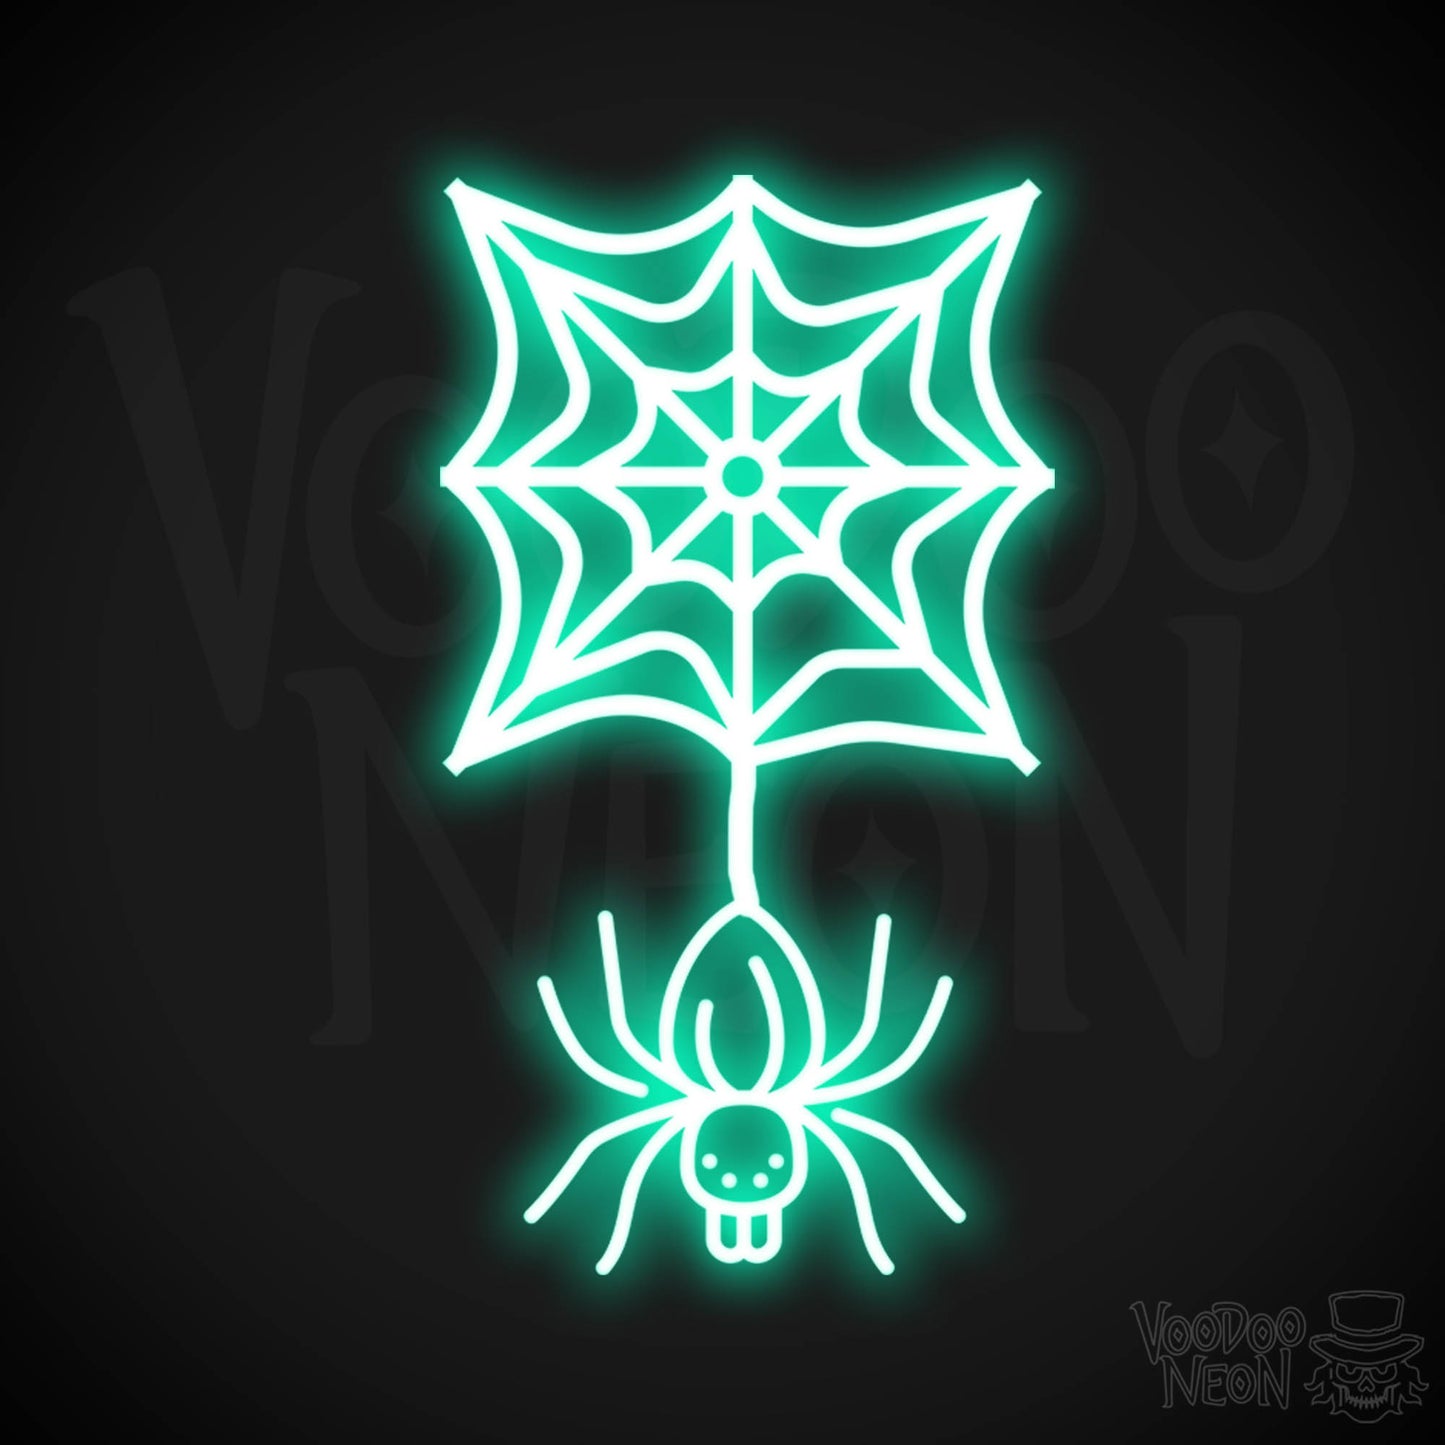 Neon Spider - Spider Neon Sign - Halloween LED Neon Spider - Color Light Green